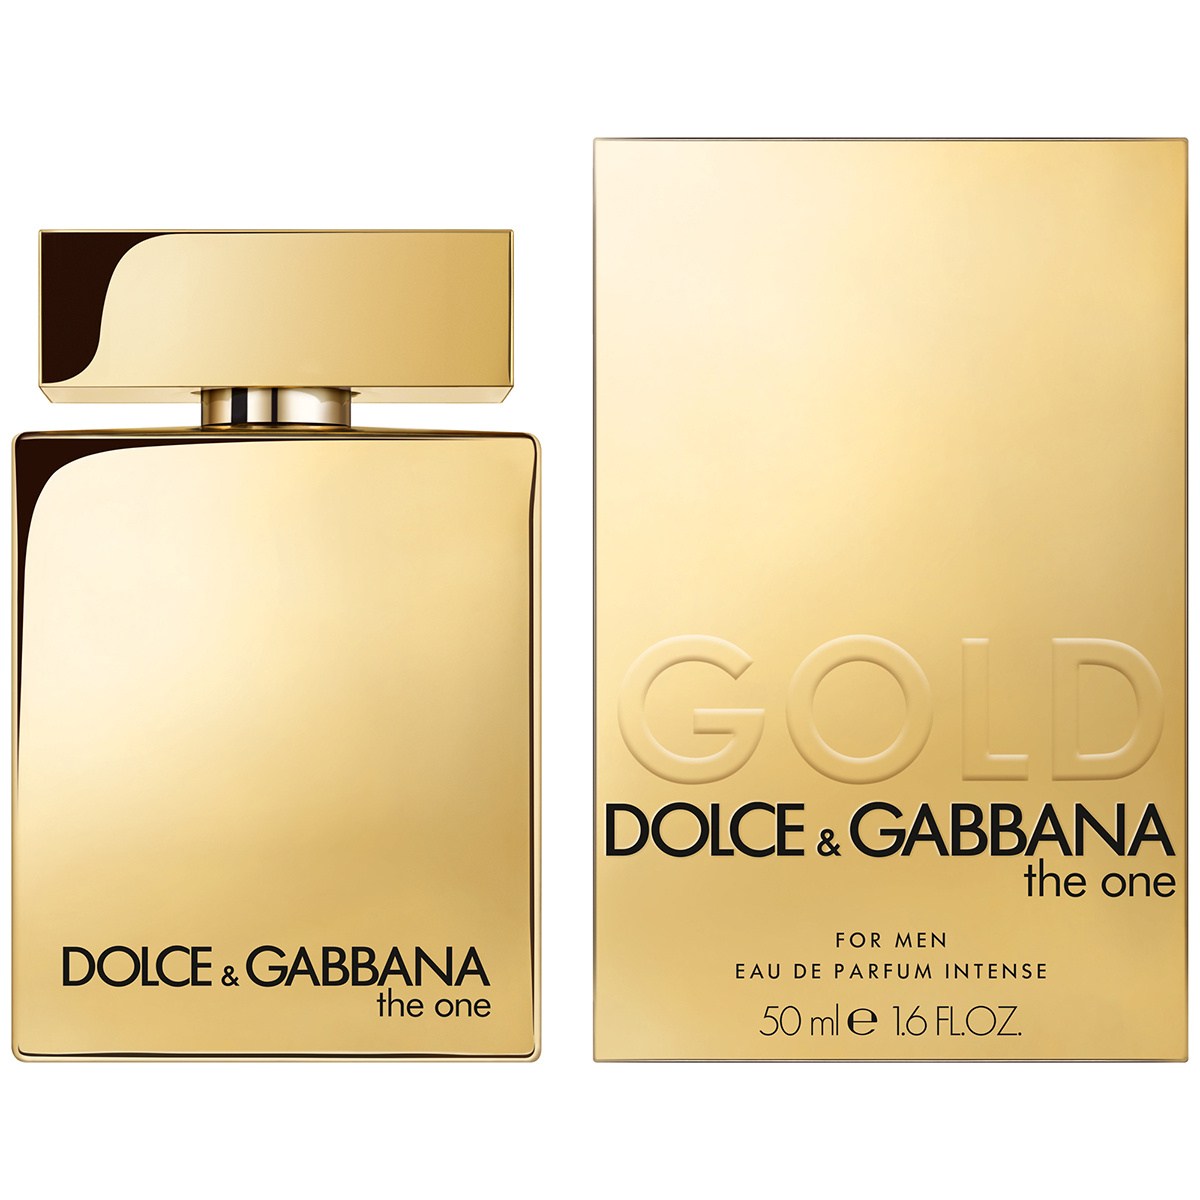 Dolce & Gabbana парфюмерная вода The One for Men Gold INTENSE, 50 мл